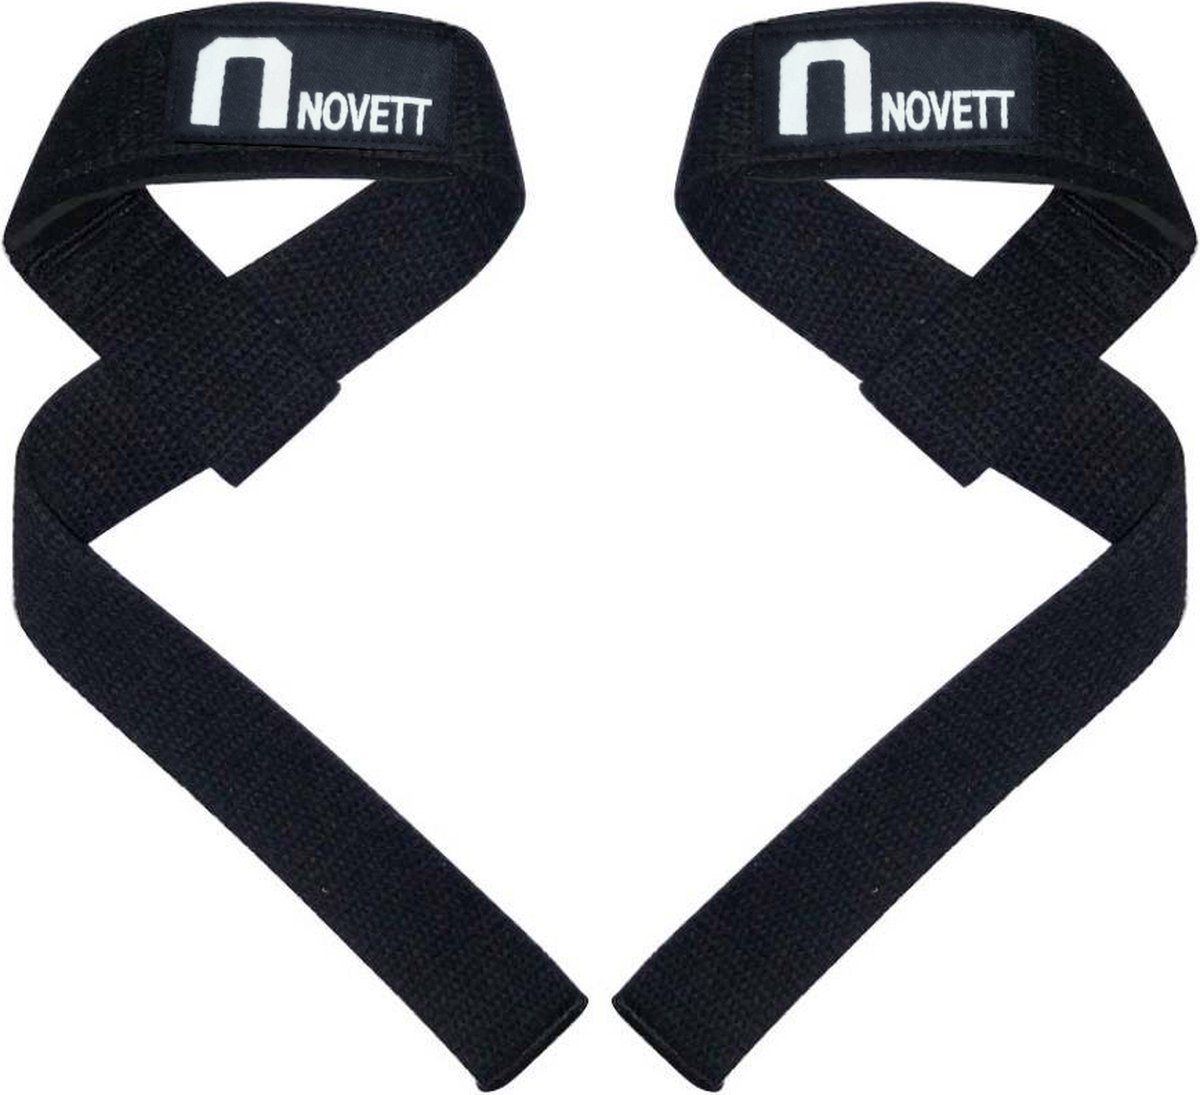 Novett Lifting Straps Zwart – Krachttraining Accessoires – Powerlifting – met Padding - Unisex- voor mannen en vrouwen – gym accessoires - Deadlift